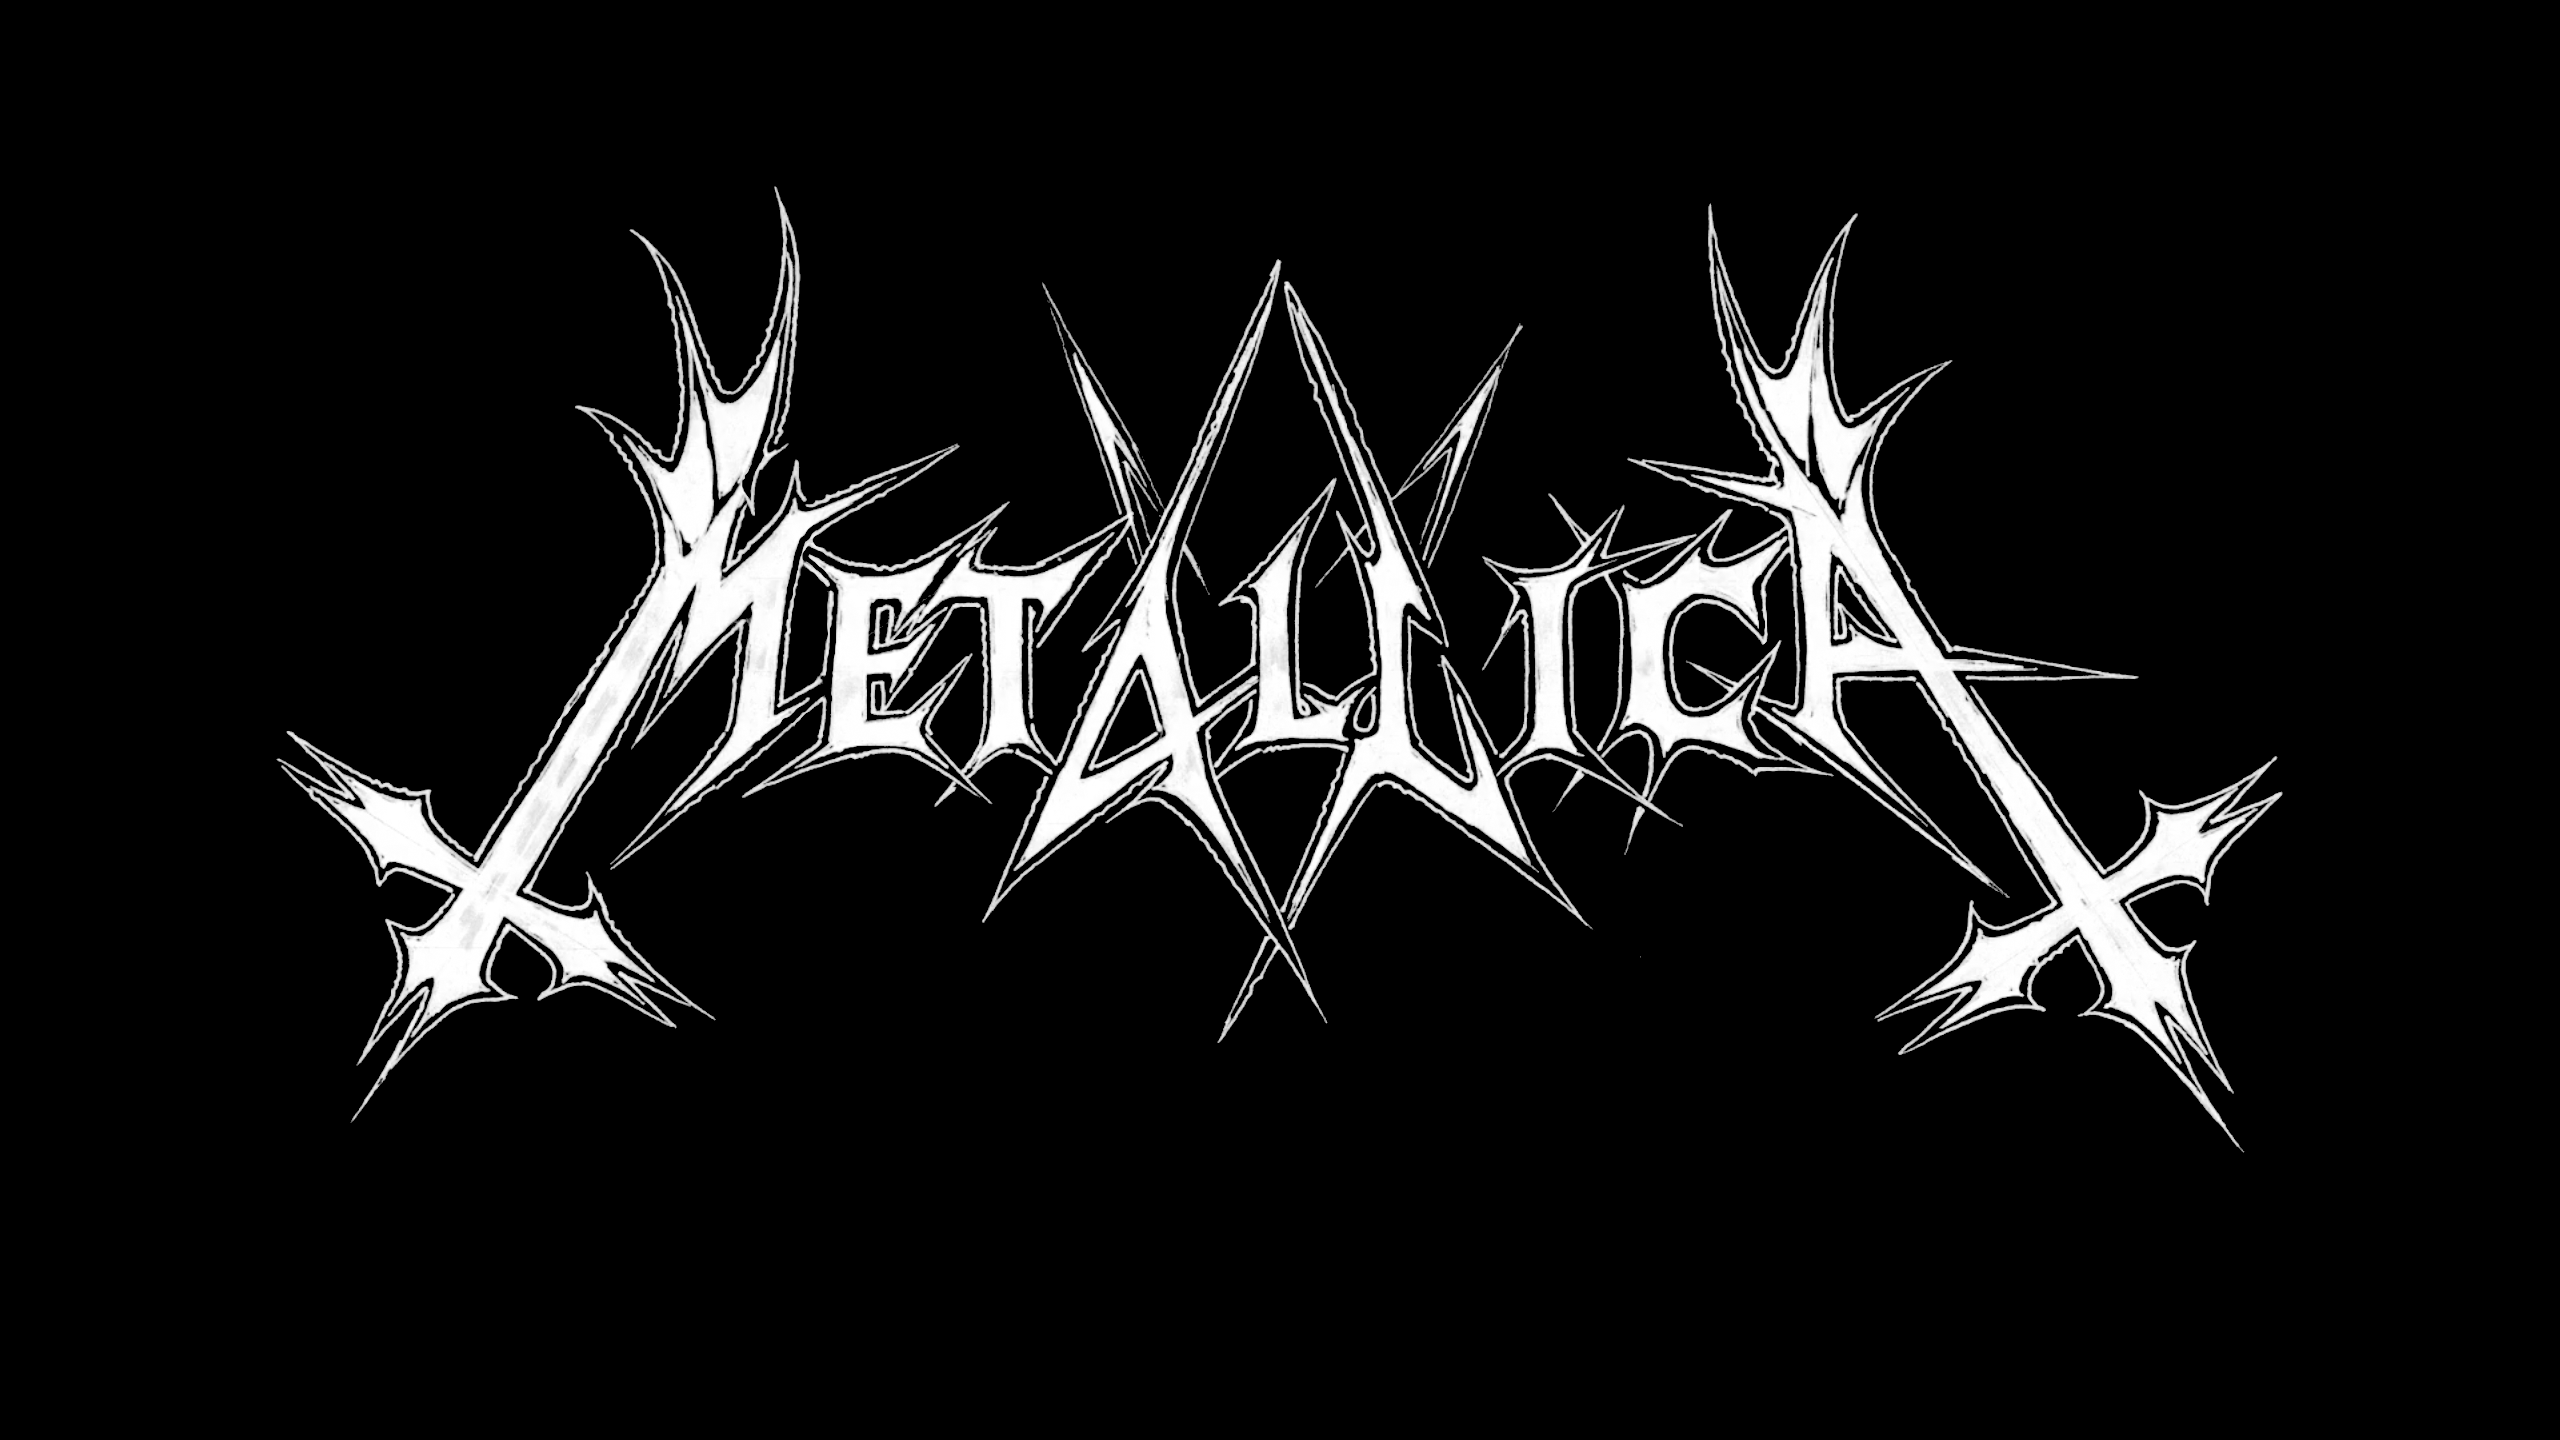 Metallica Logo - Metallica Mayhem logo from ManUNkind video